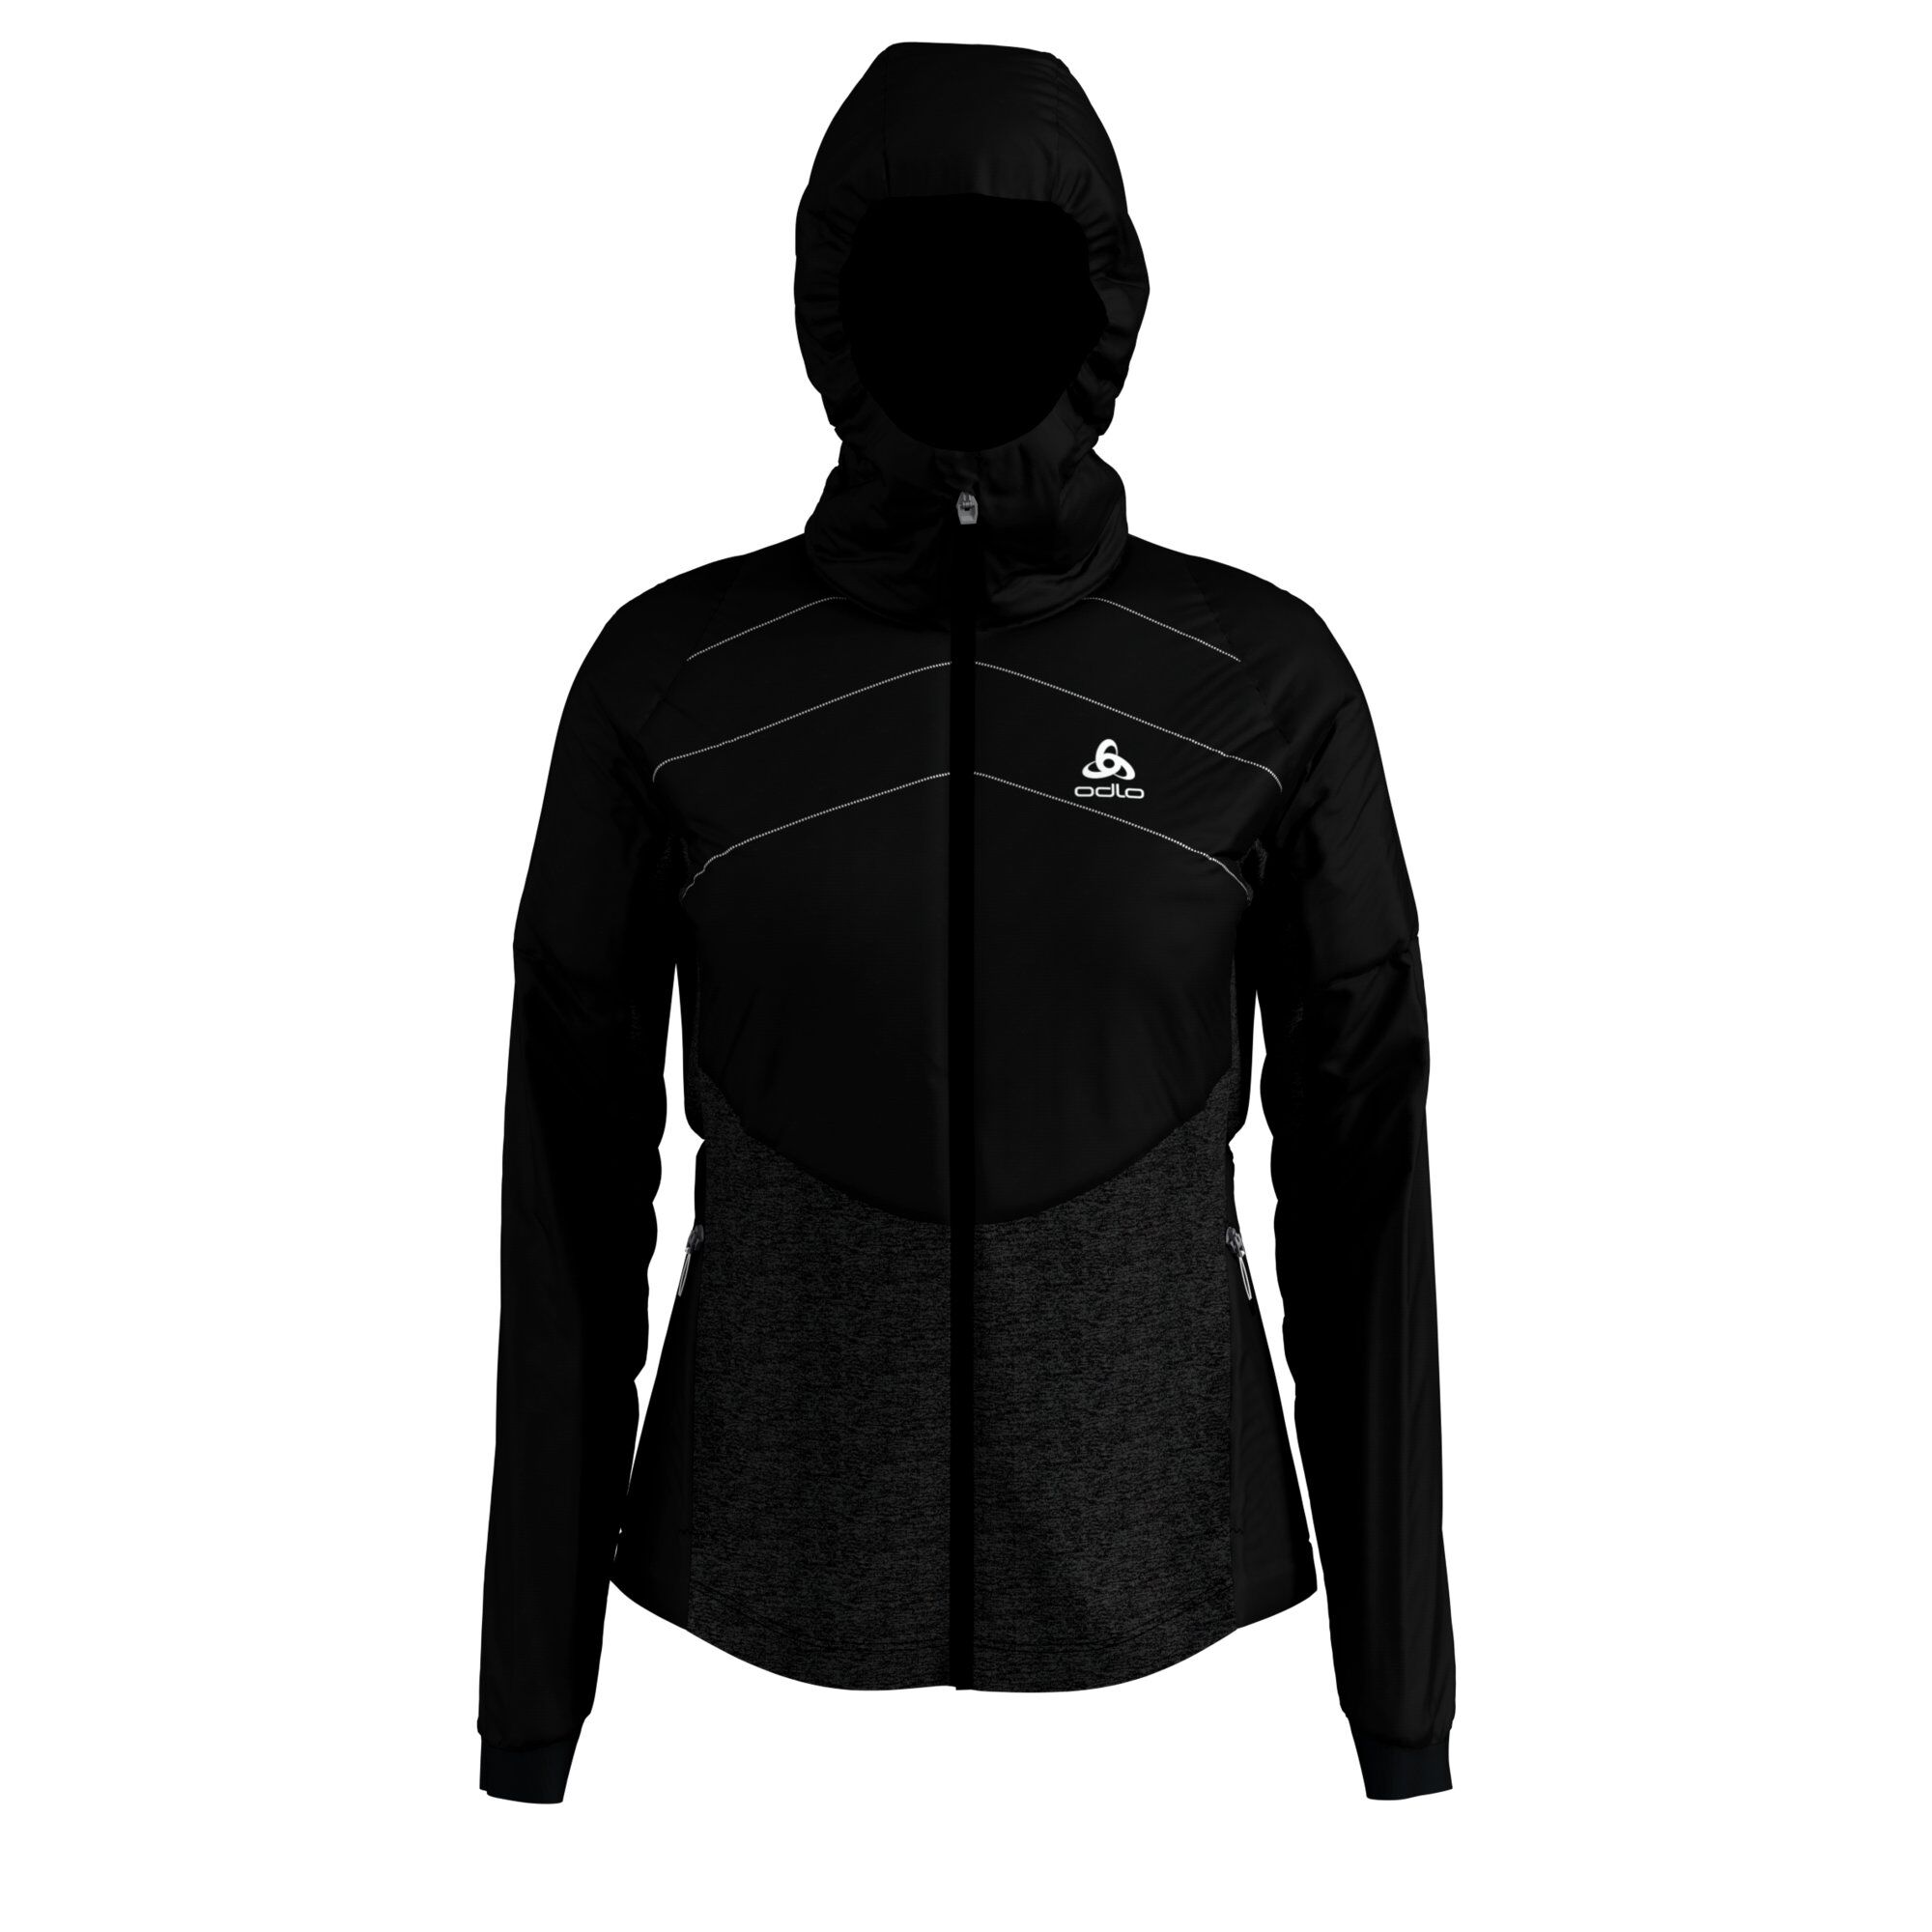 Odlo Millennium S-Thermic Jacket - Softshell jacket - Women's